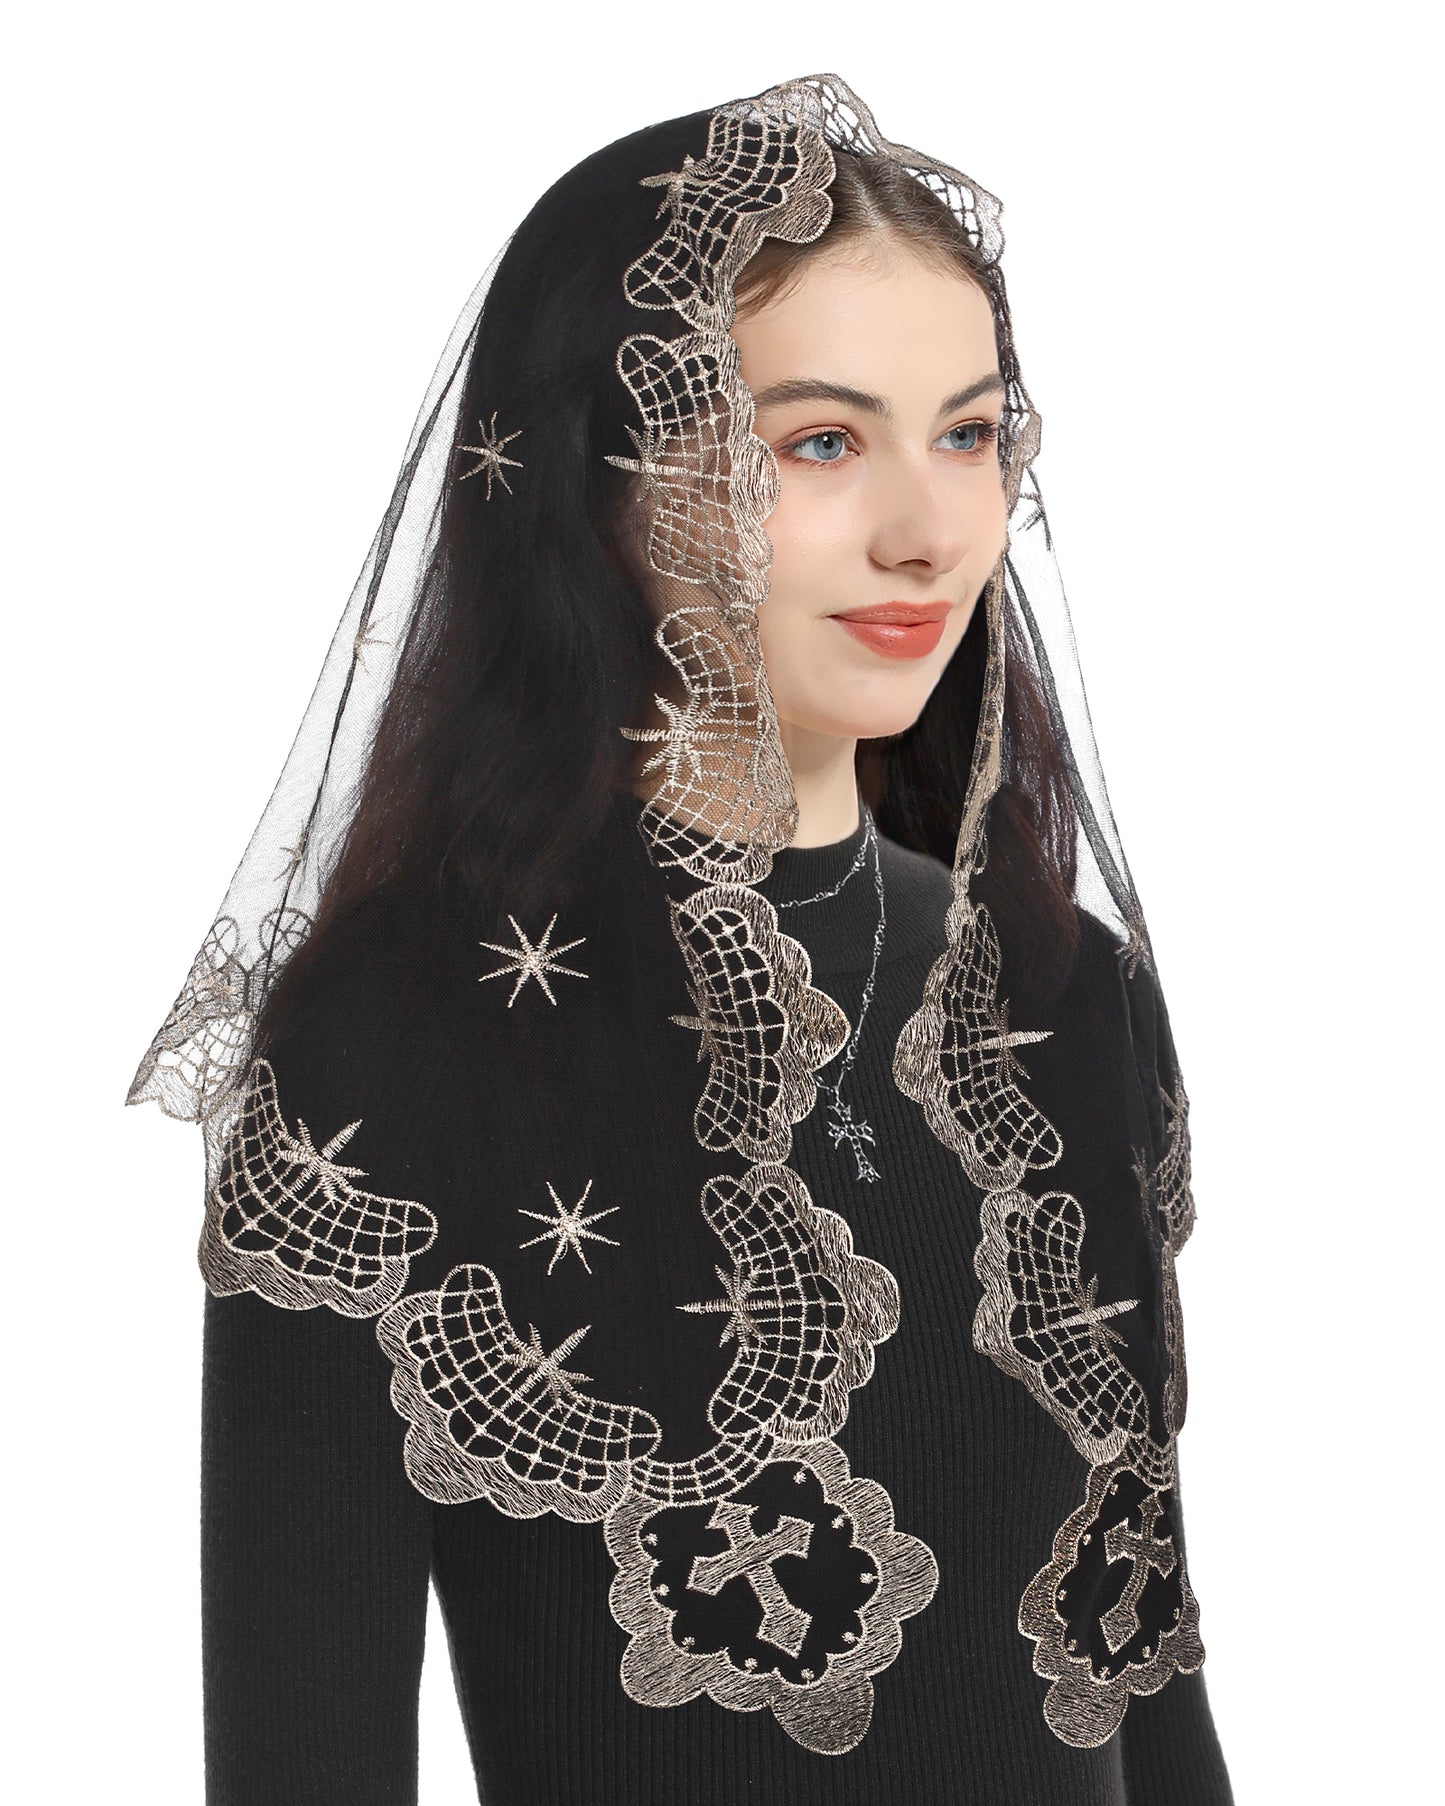 Bozidol Church Veil Triangular Mantilla - Cross Chalice Embroidered Vintage Catholic Mass Veil for Women